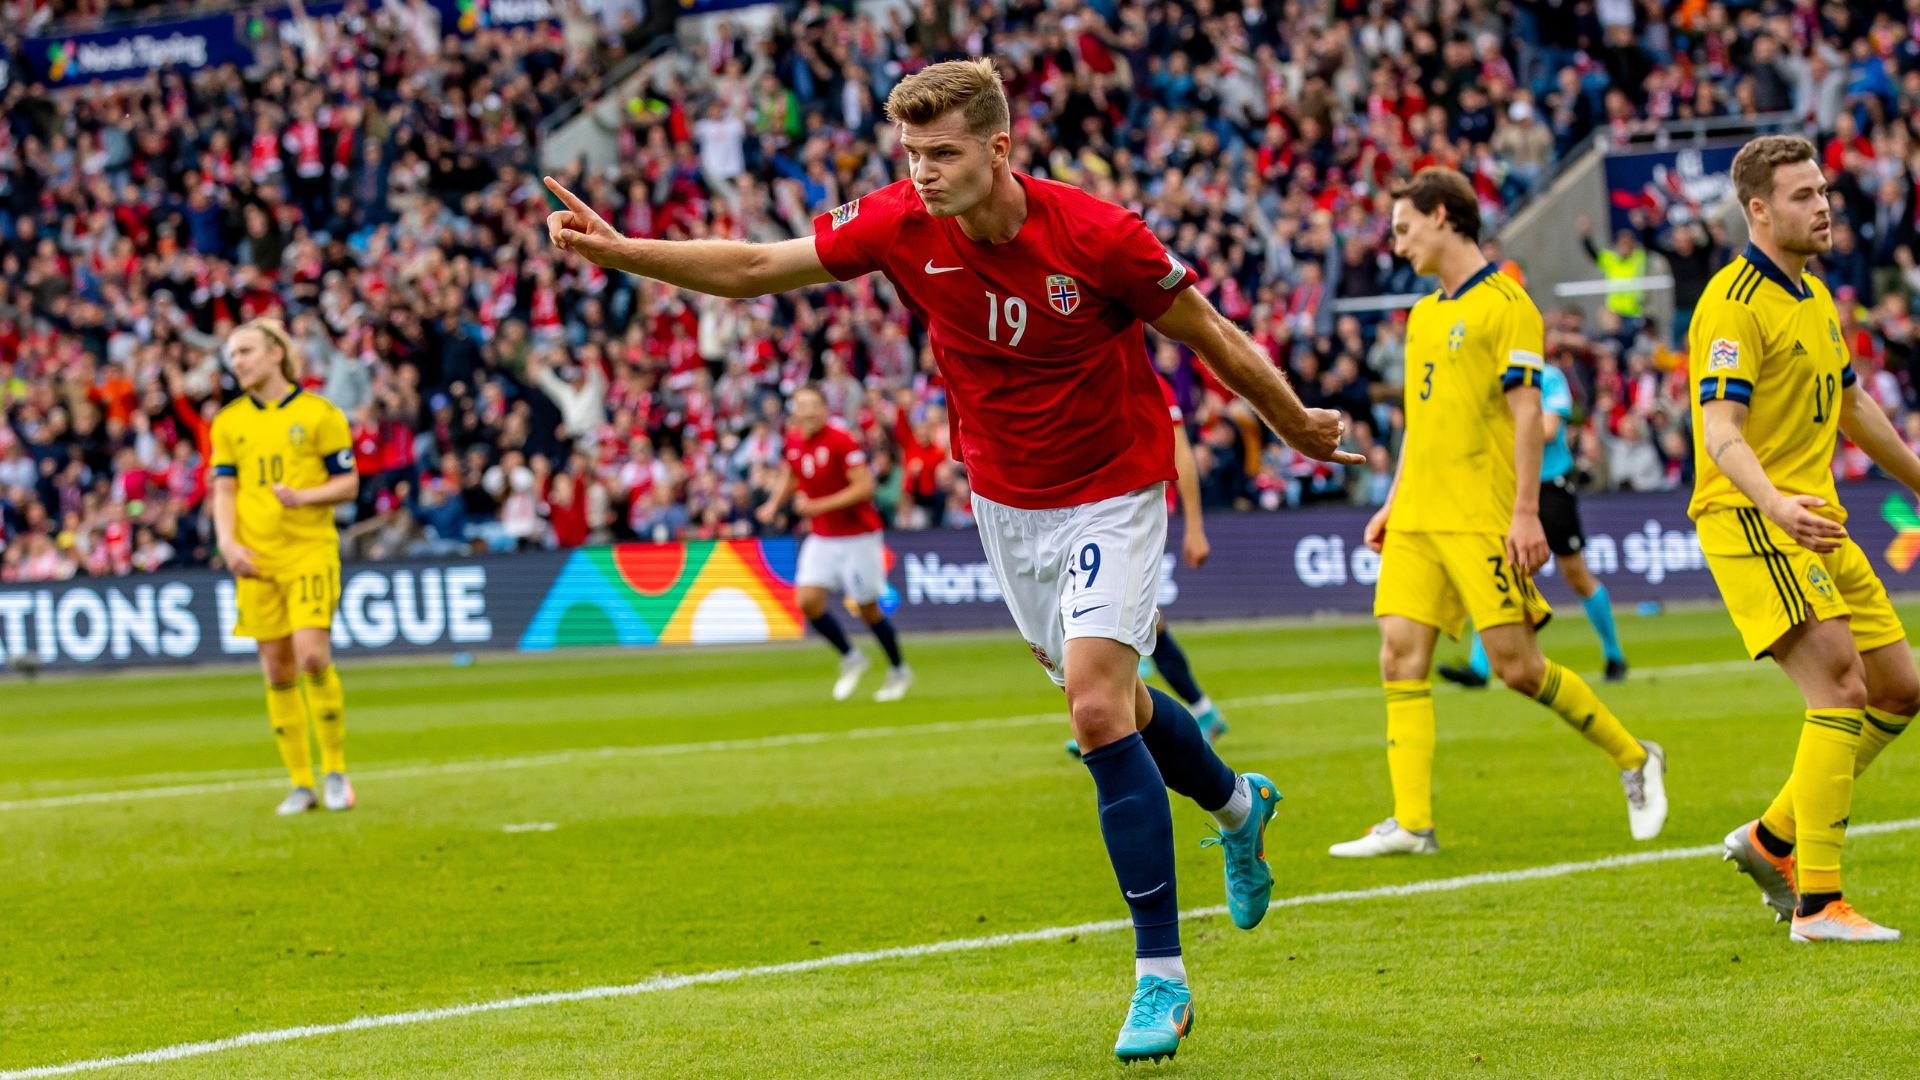 Alexander Sørloth scoring for Norway against Sweden. Photo: froarn / Shutterstock.com.